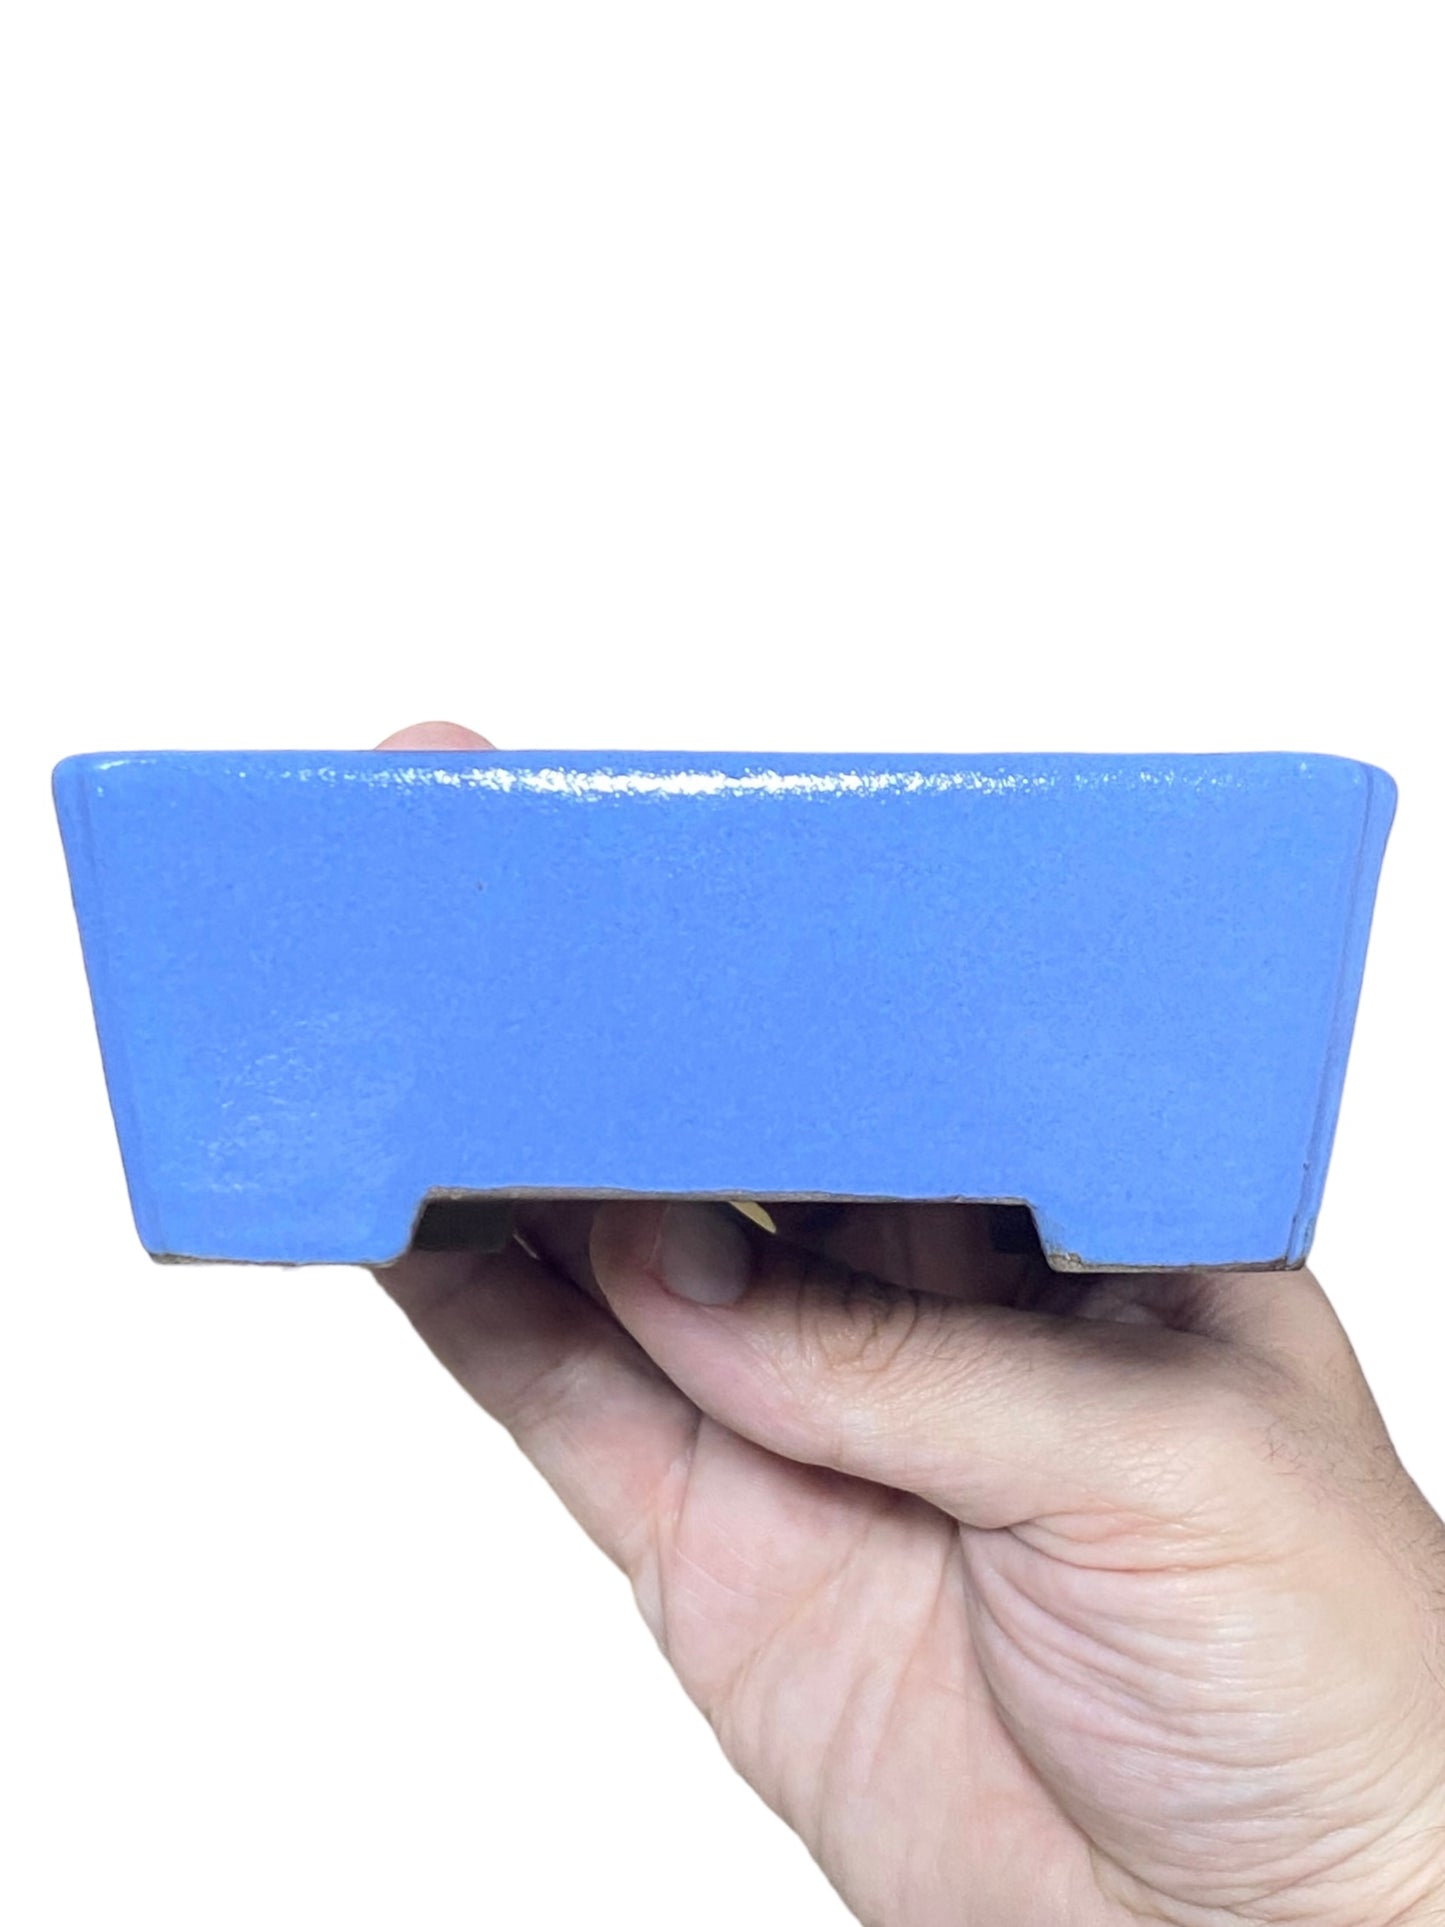 Shibakatsu - Bright Blue Glazed Square Style Bonsai Pot (4-7/8" wide)